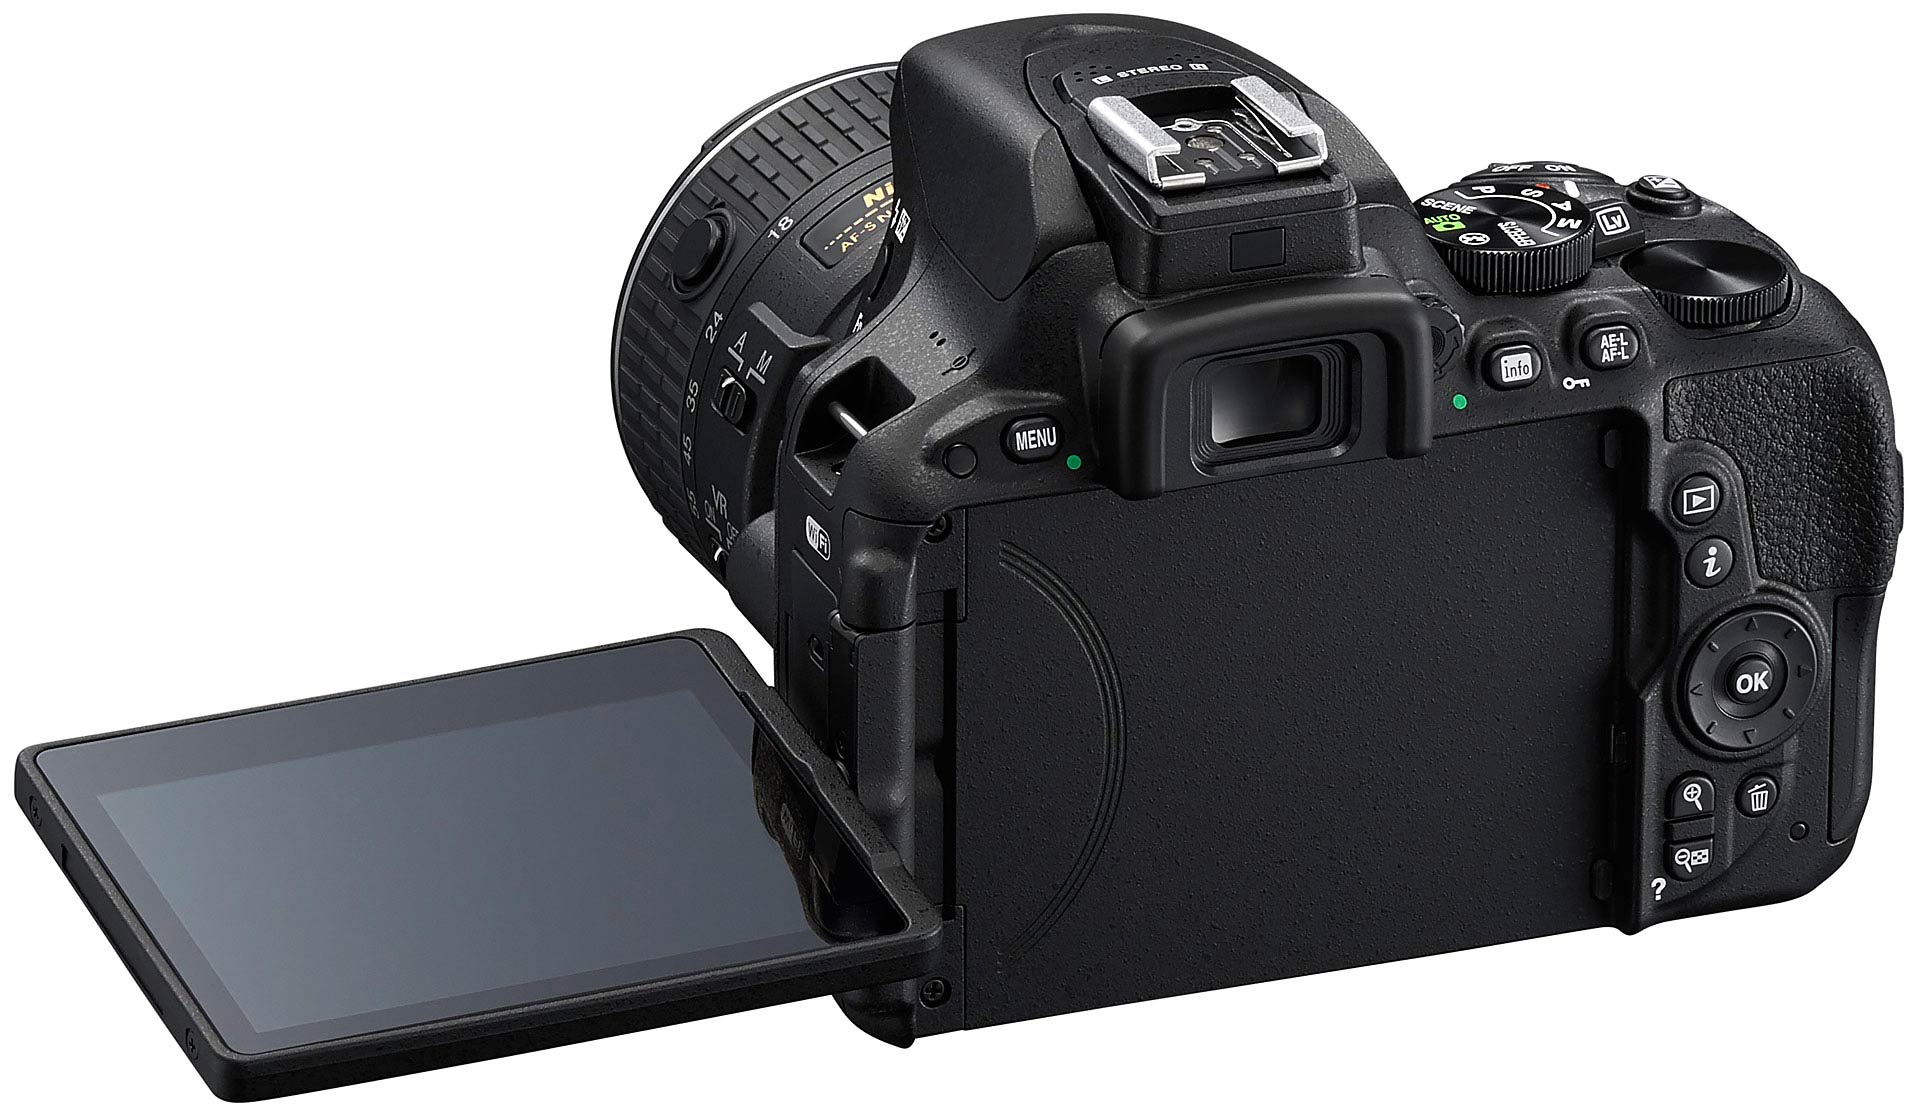 Nikon D5500 articulated screen